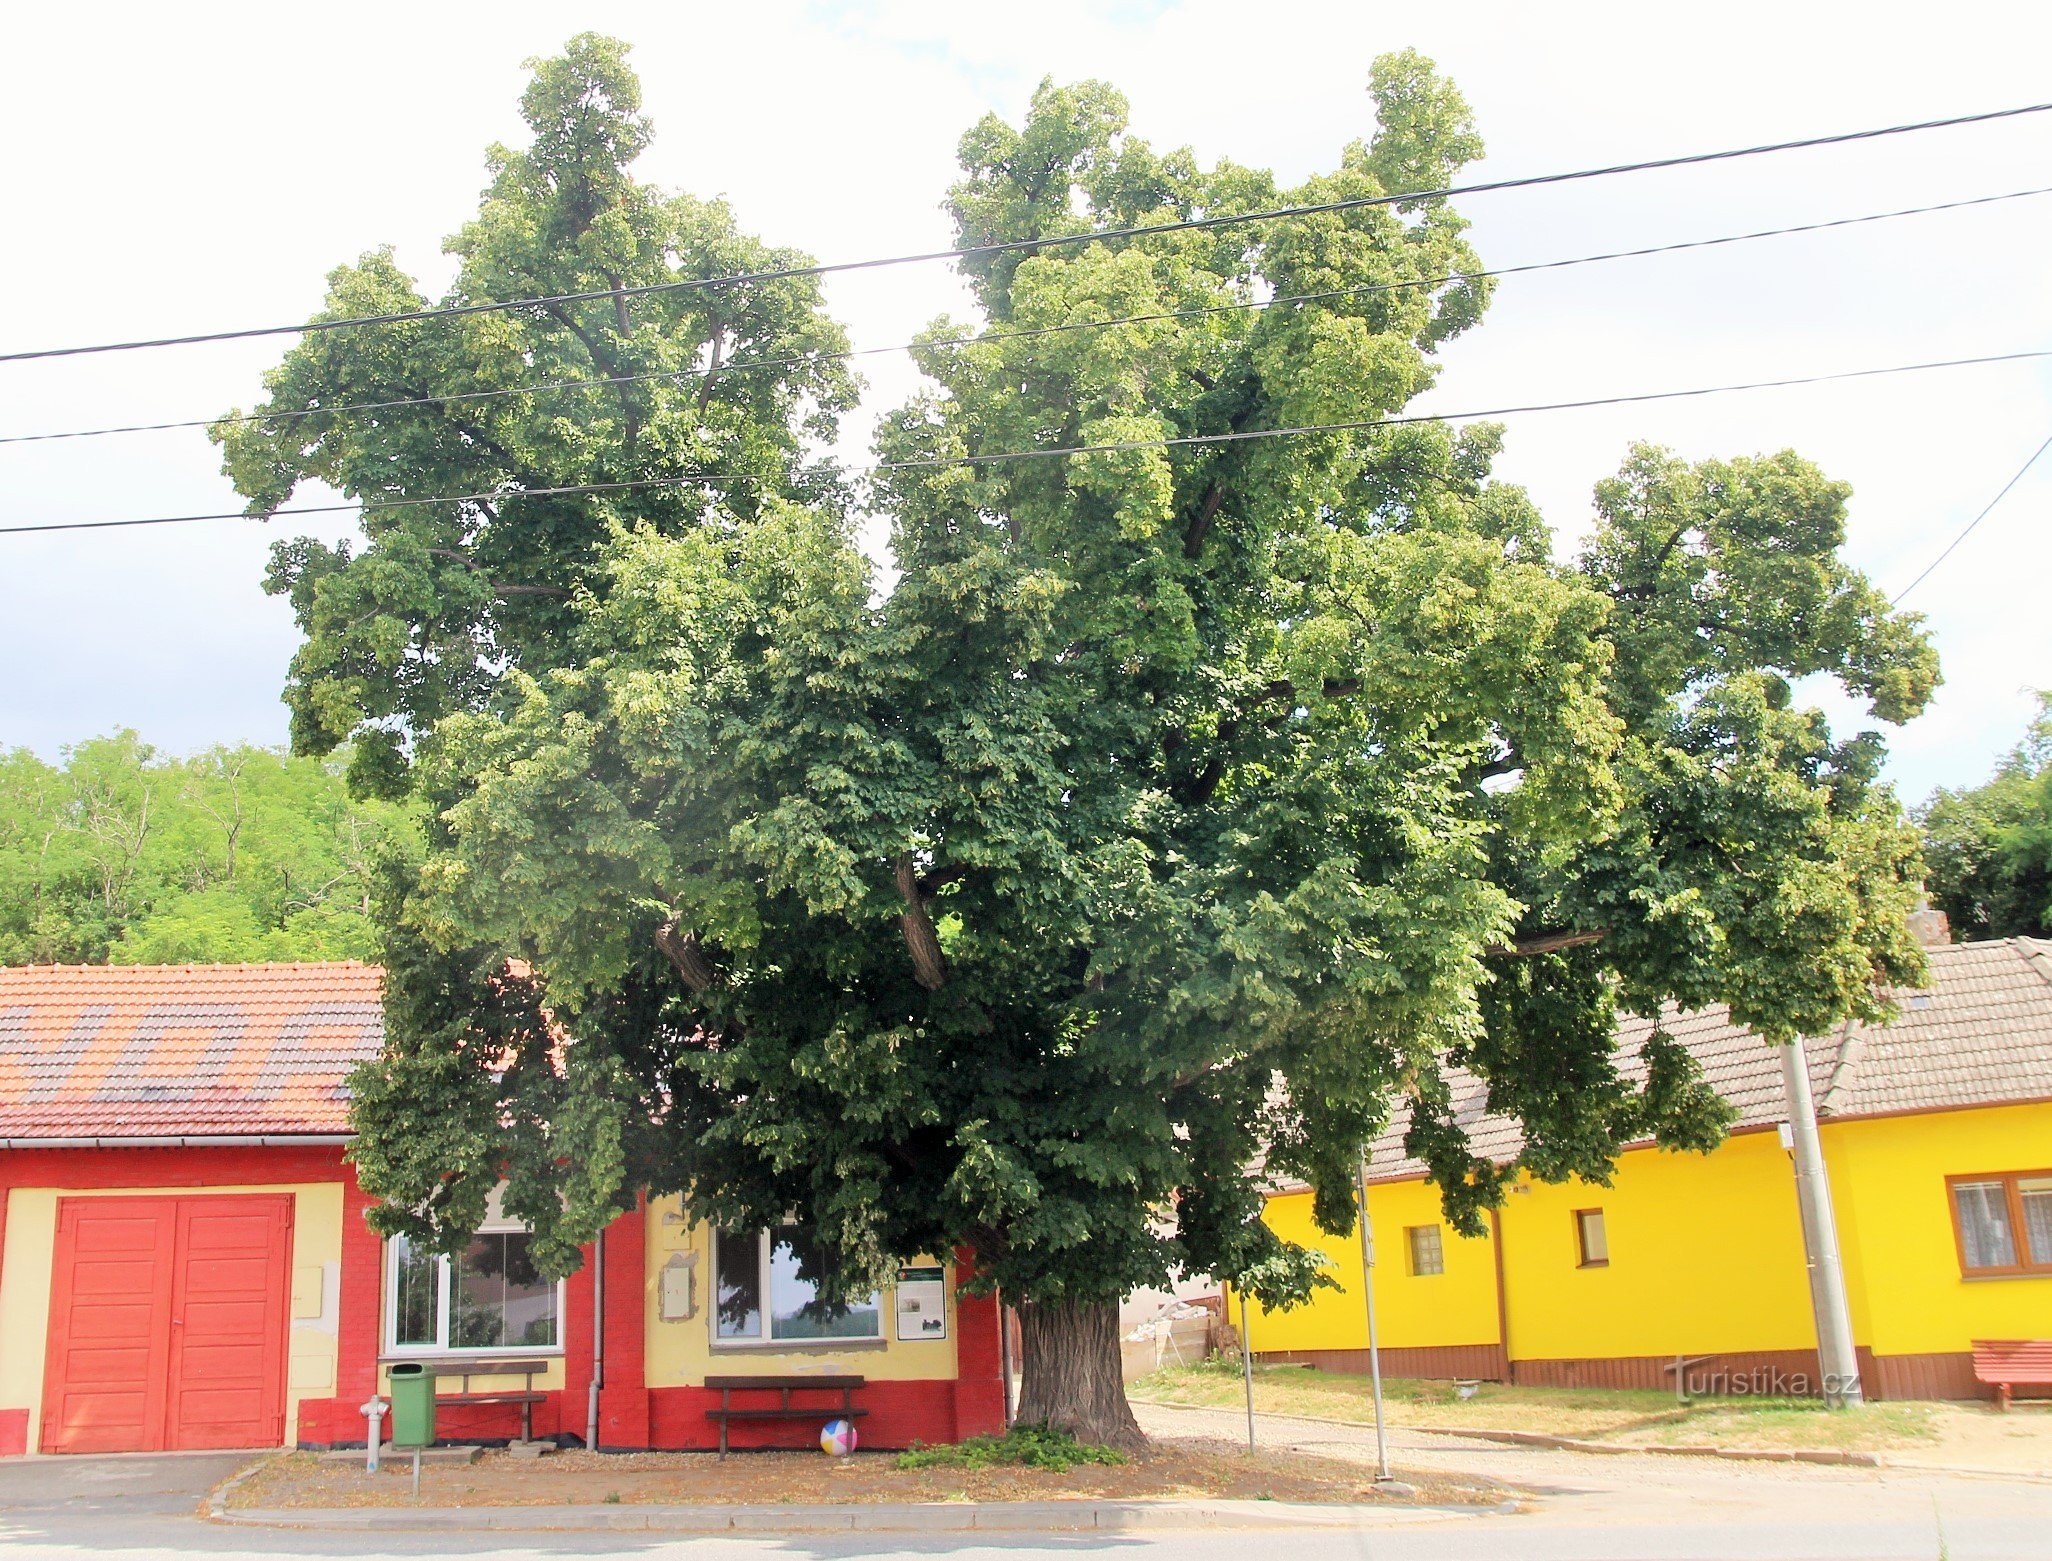 Memorial lime tree in Moravské Bránice